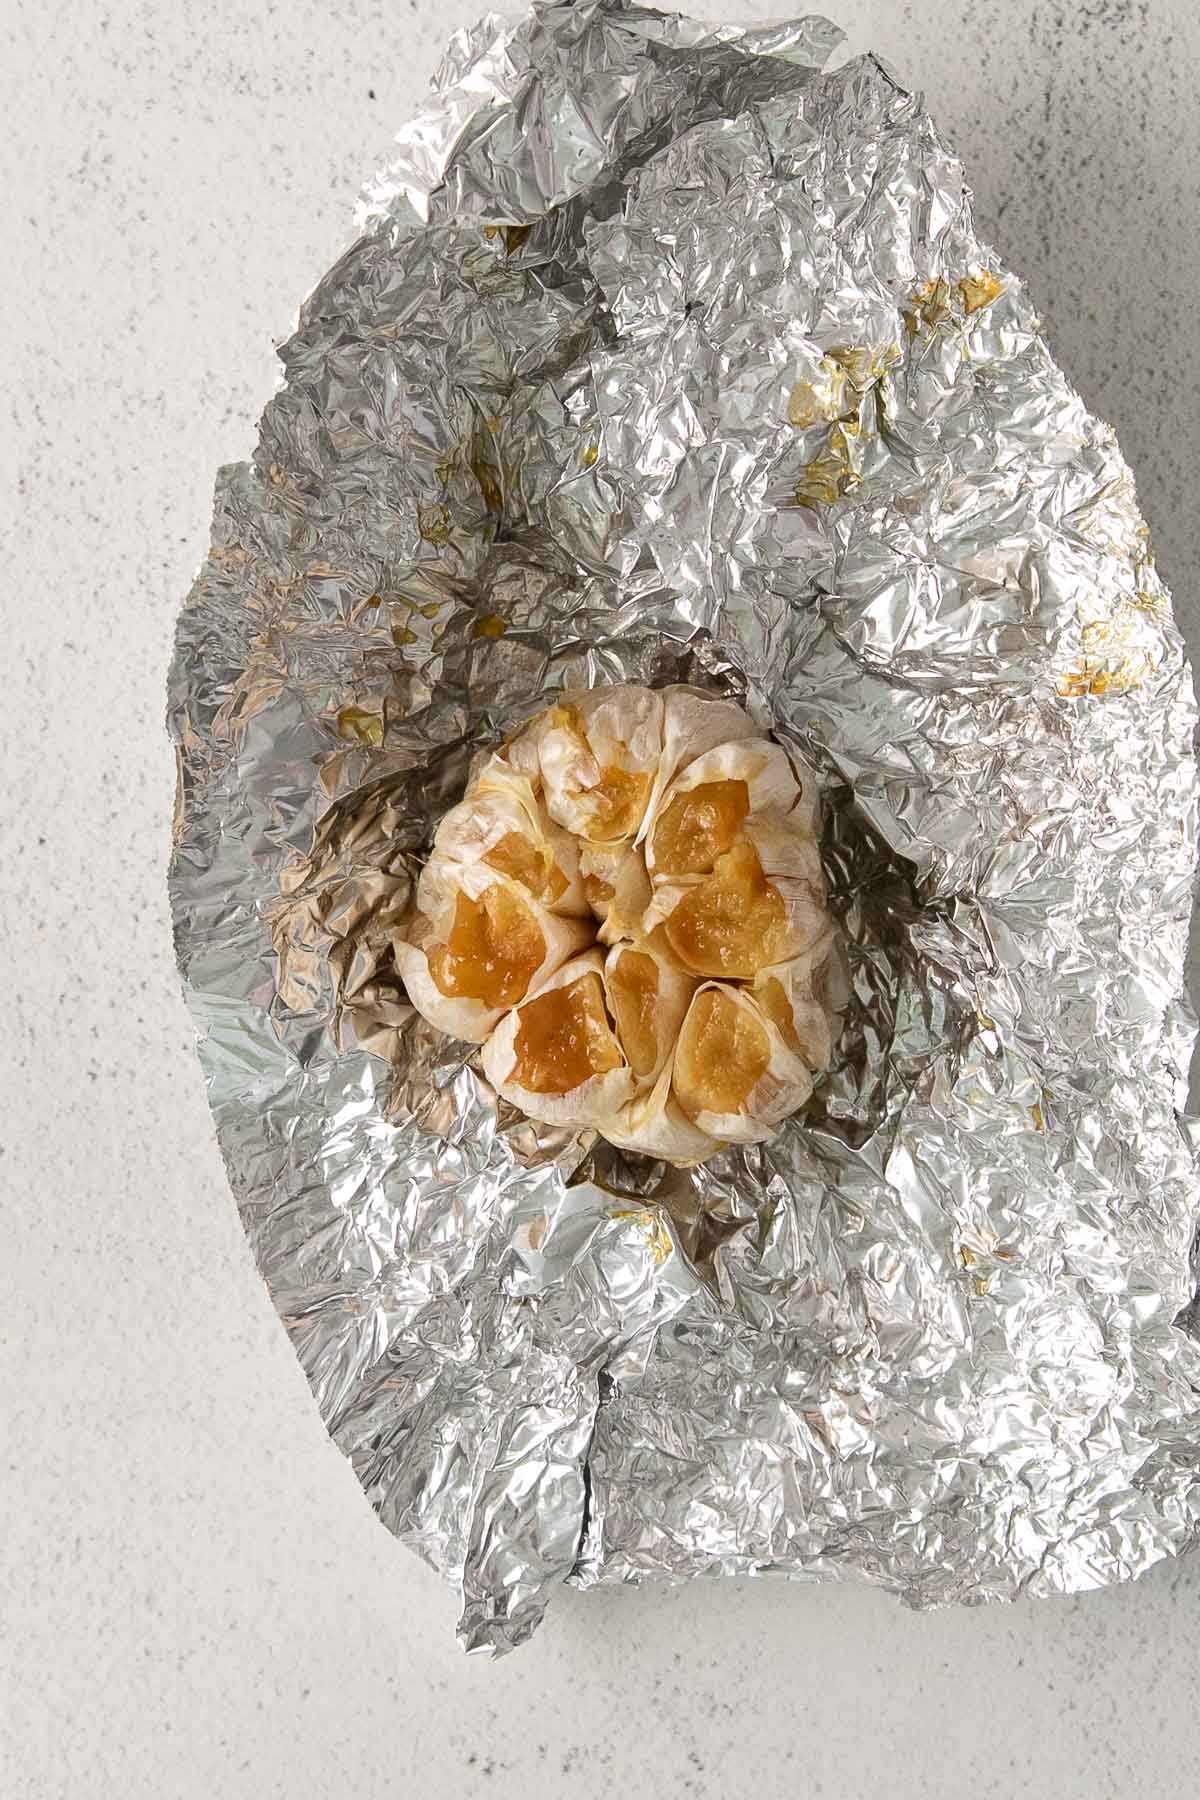 whole roasted garlic clove on aluminum foil